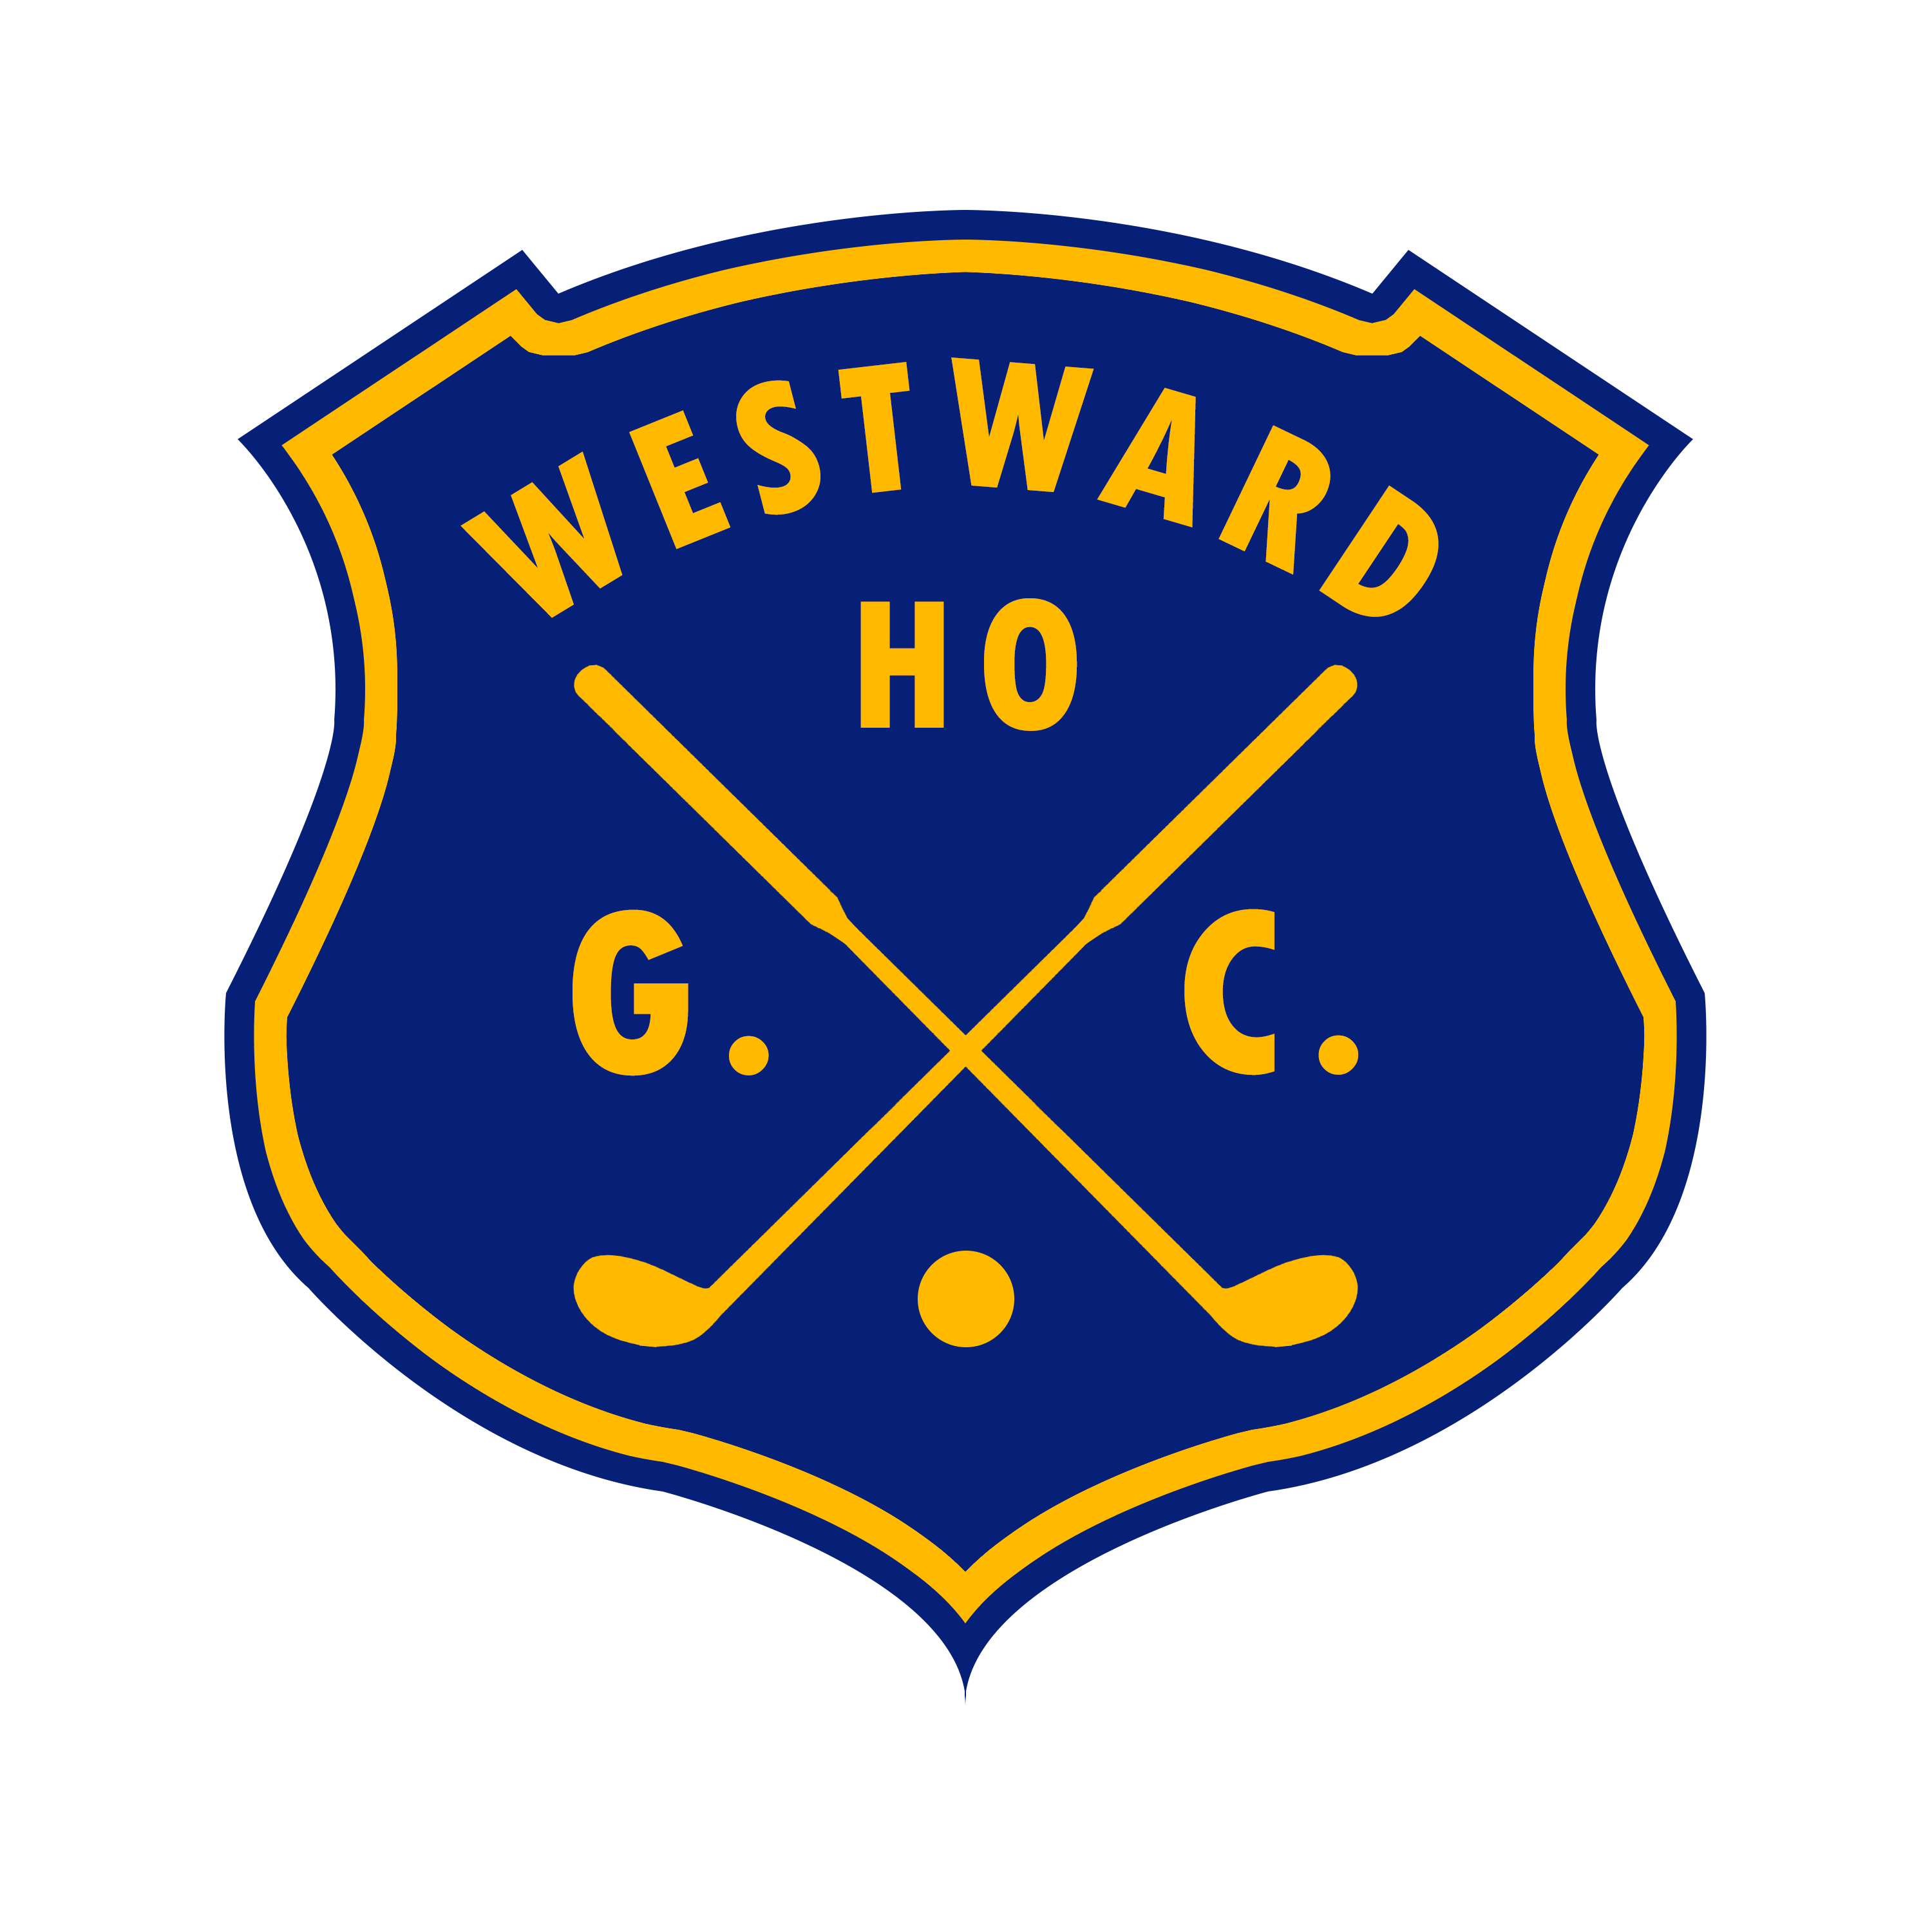 eastward ho country club membership